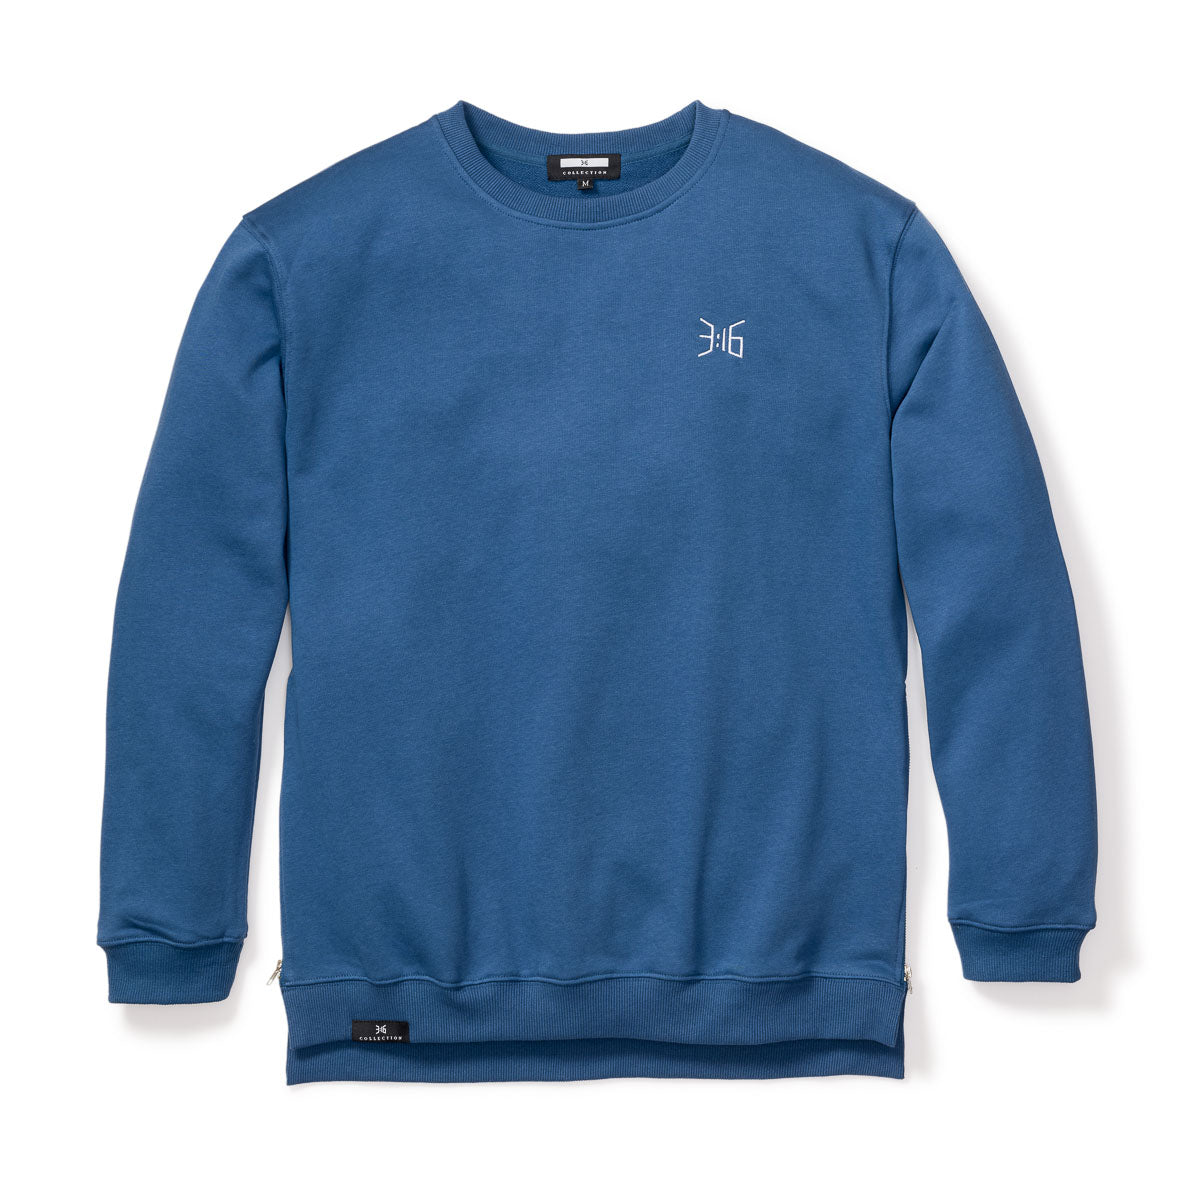 3:16 Signature Sweatshirt - Blue